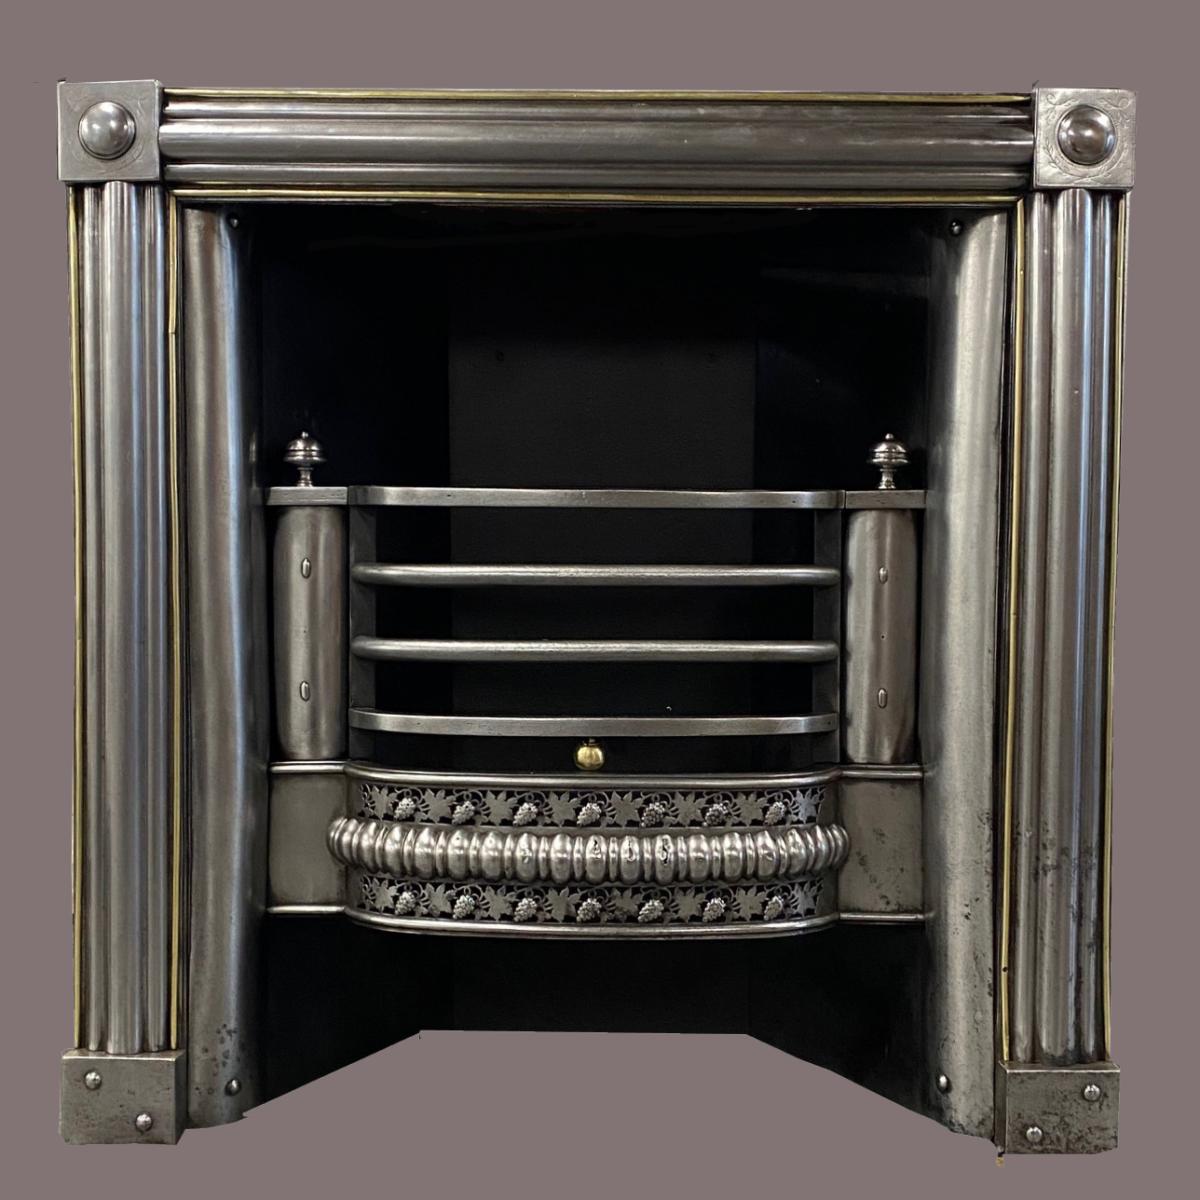 A steel register grate with ensuite fender